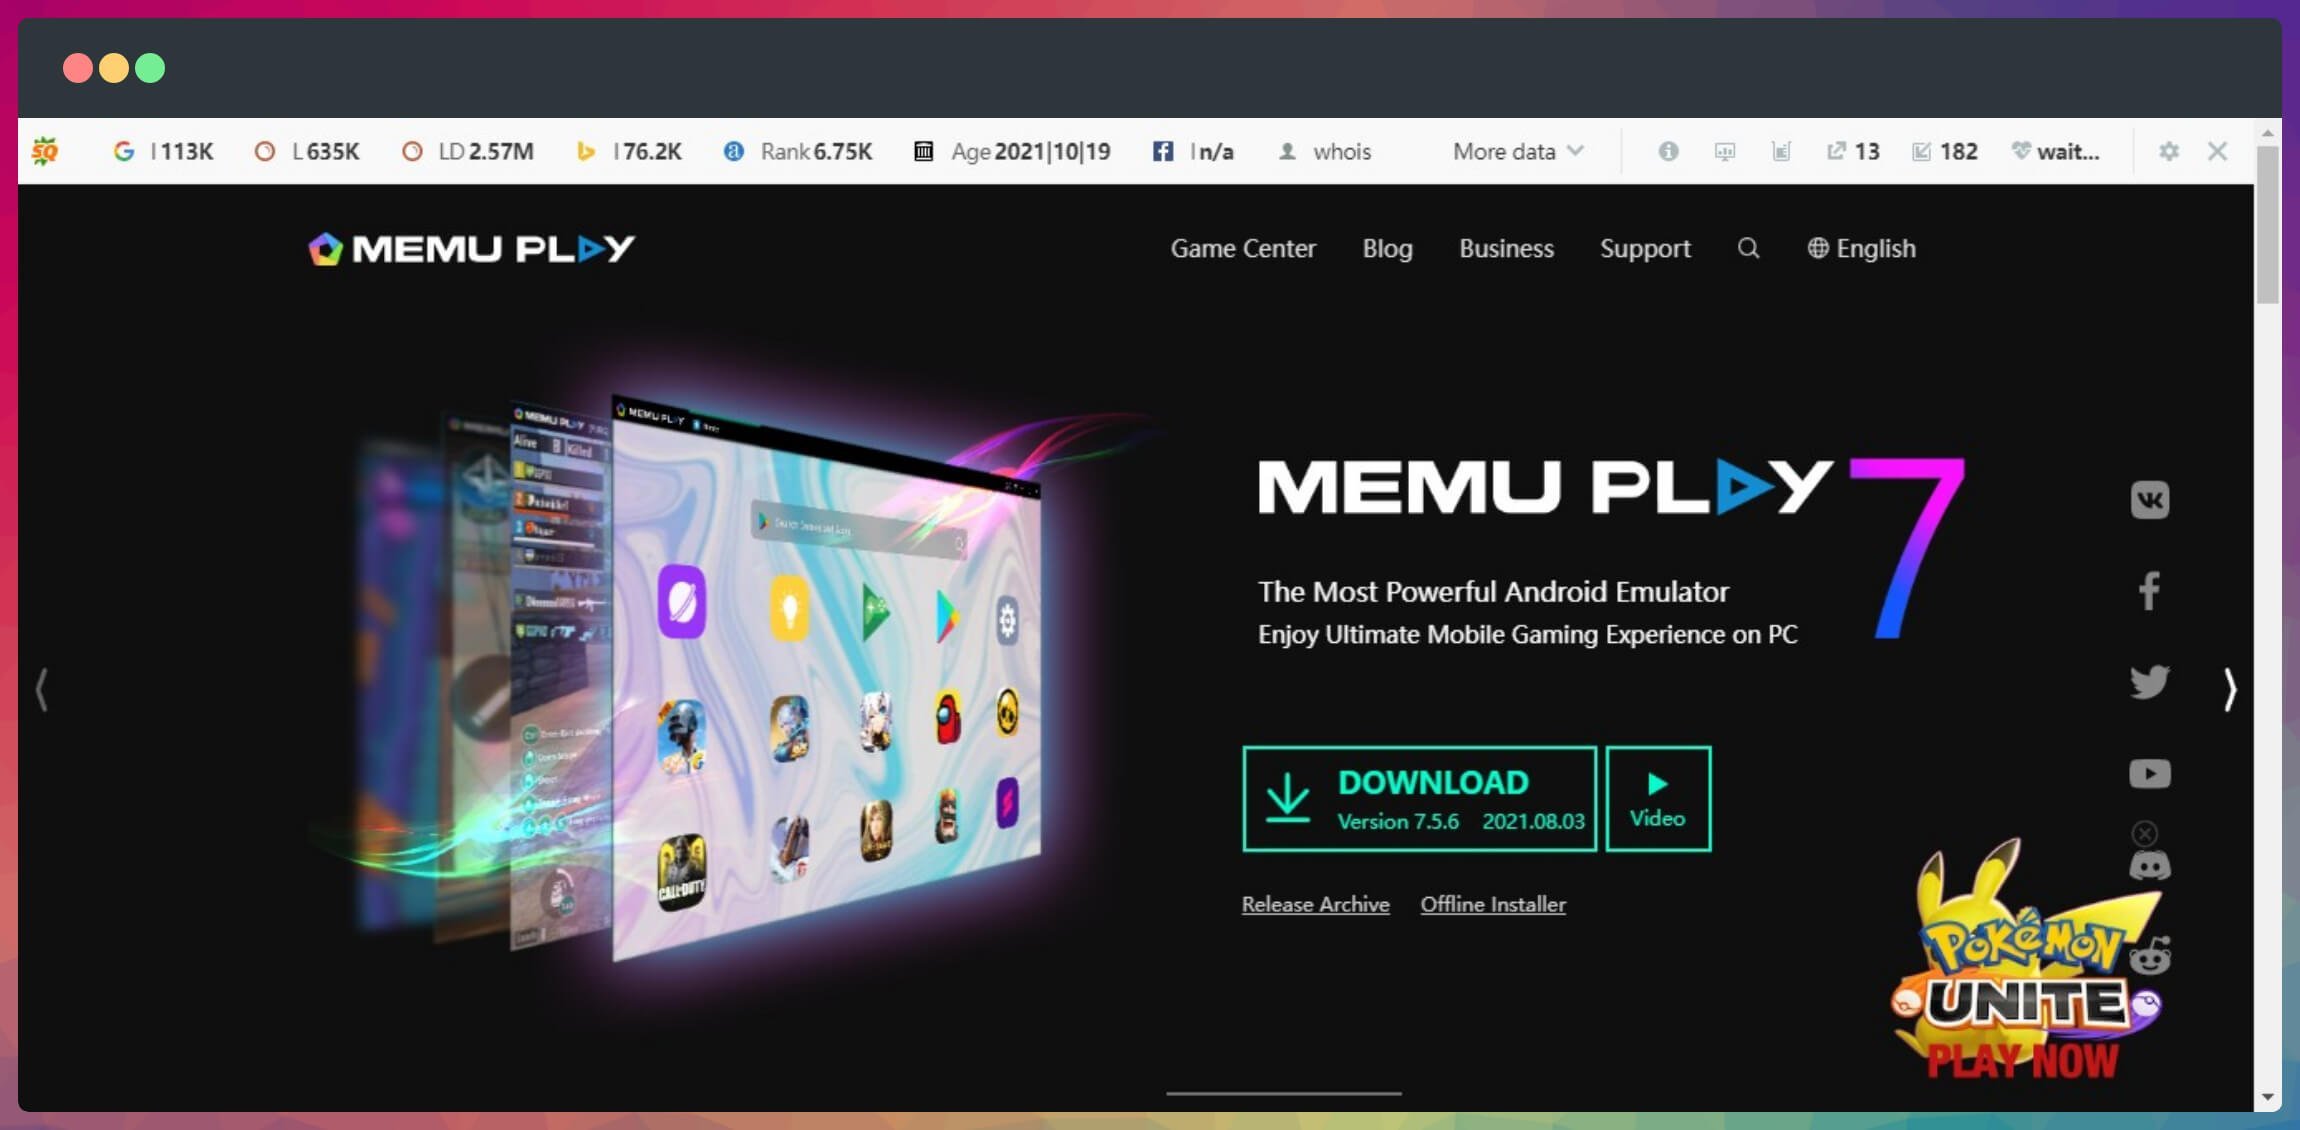 memuplay android emulator official website homepage